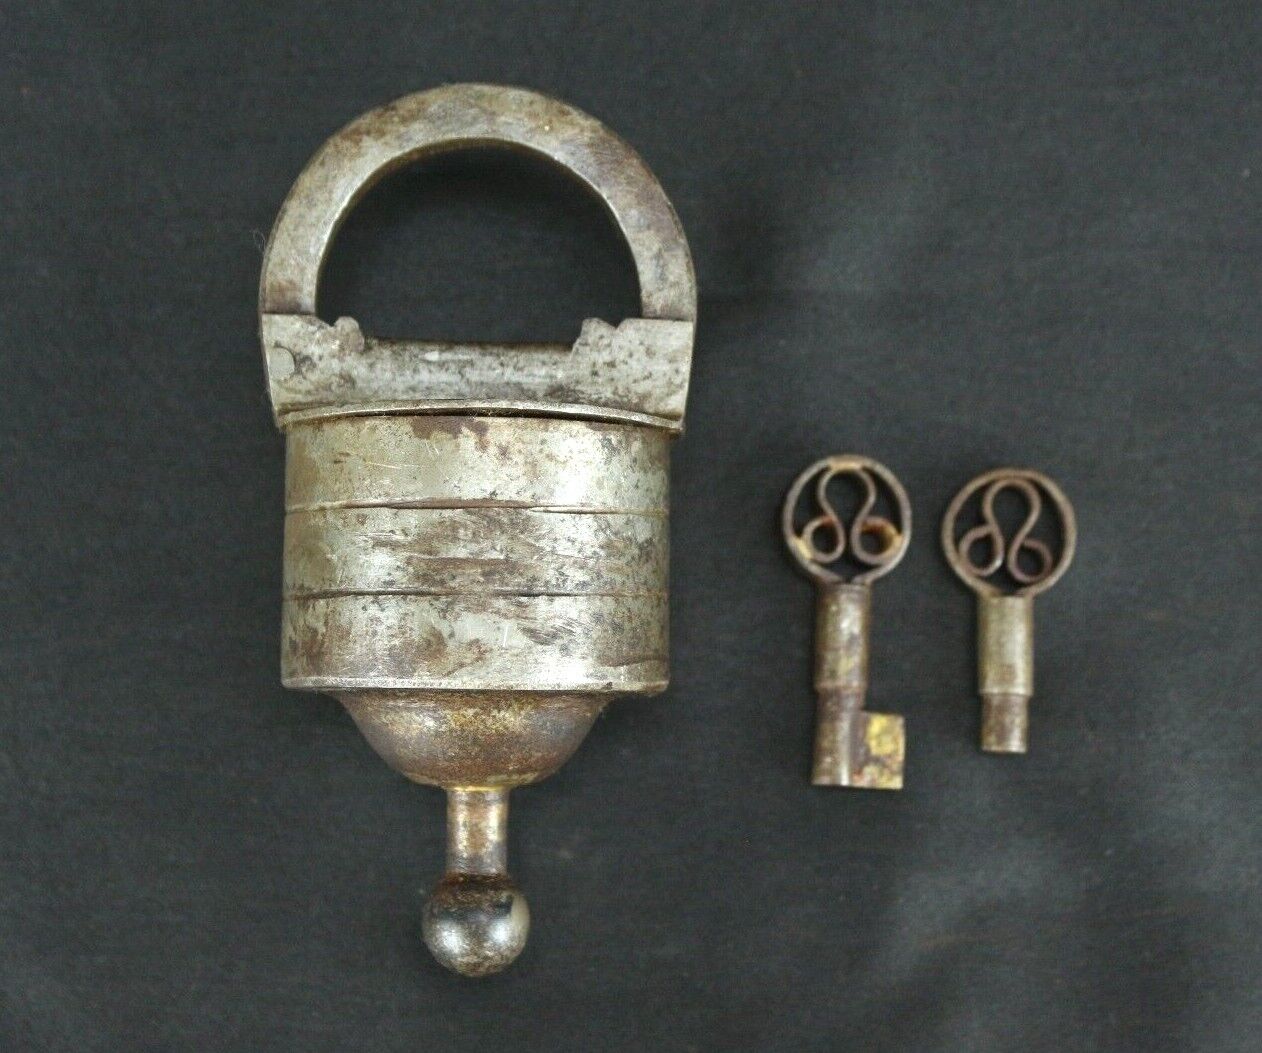 Vintage Big Puzzle Lock: Handmade Iron Lock With Tricky Mechanism, Two Keys